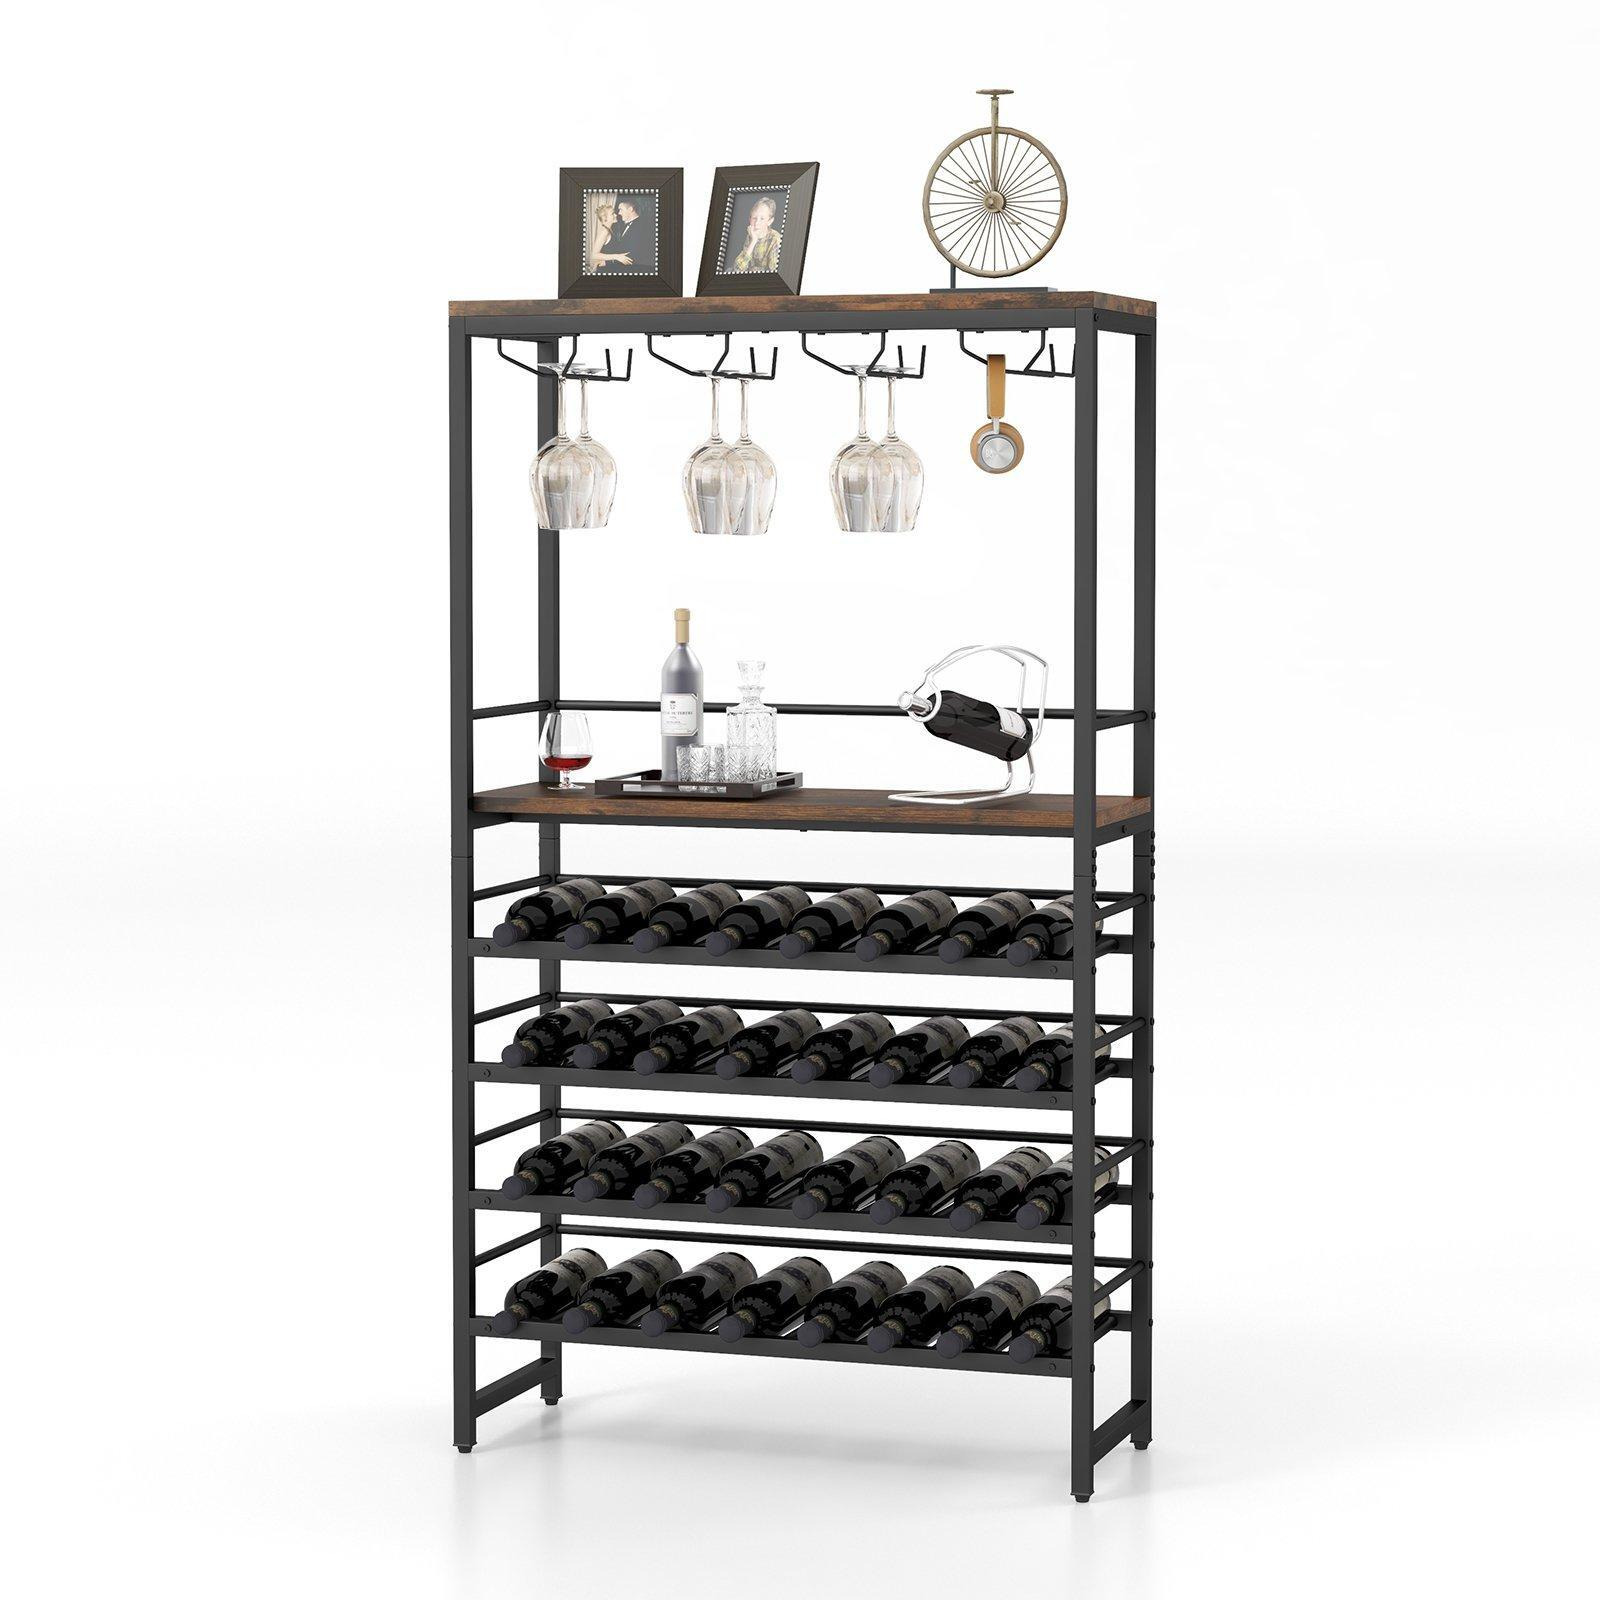 32 Bottles Wine Rack 6-Tier Freestanding Wine Display Holder with Middle Shelf - image 1